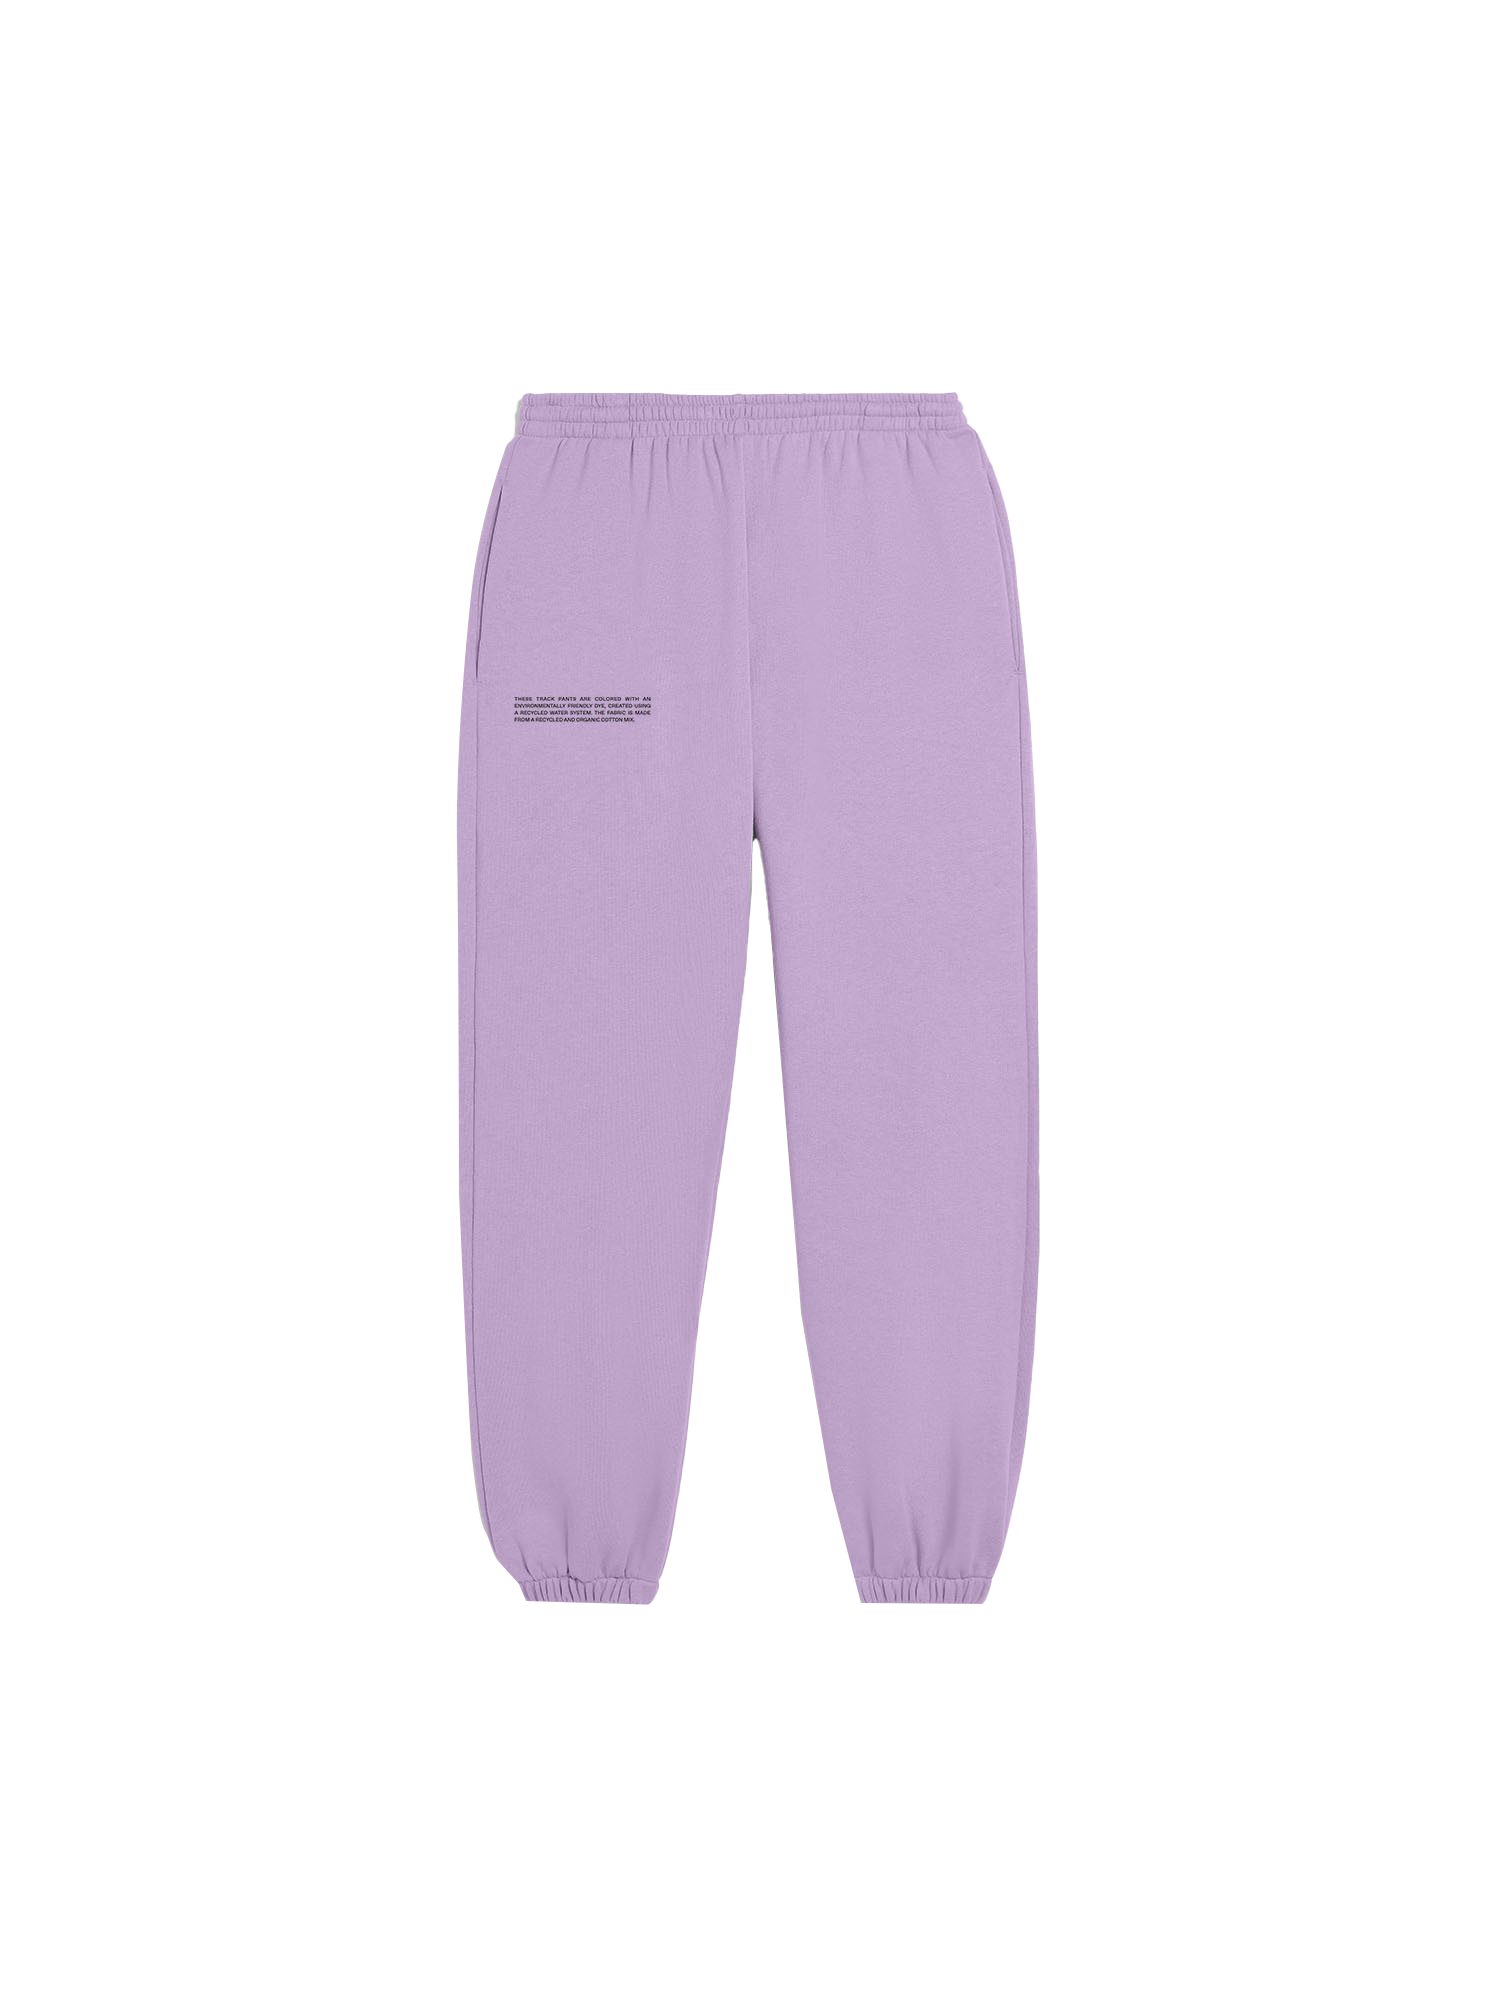 Womens Purple Pants